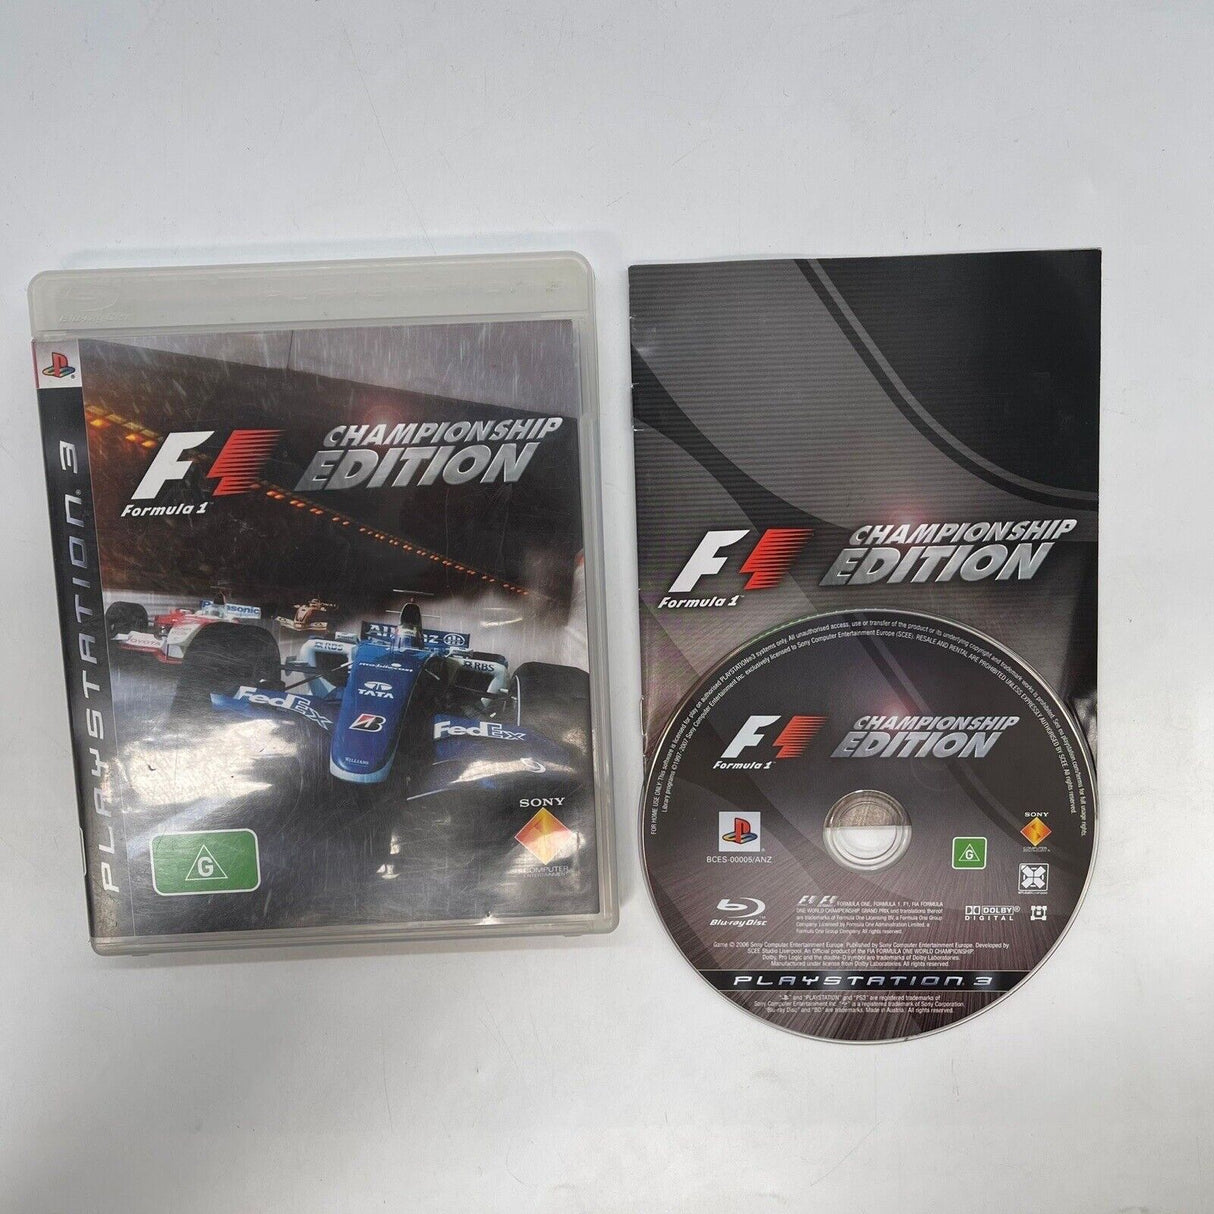 F1 Championship Edition PS3 Playstation 3 Game + Manual